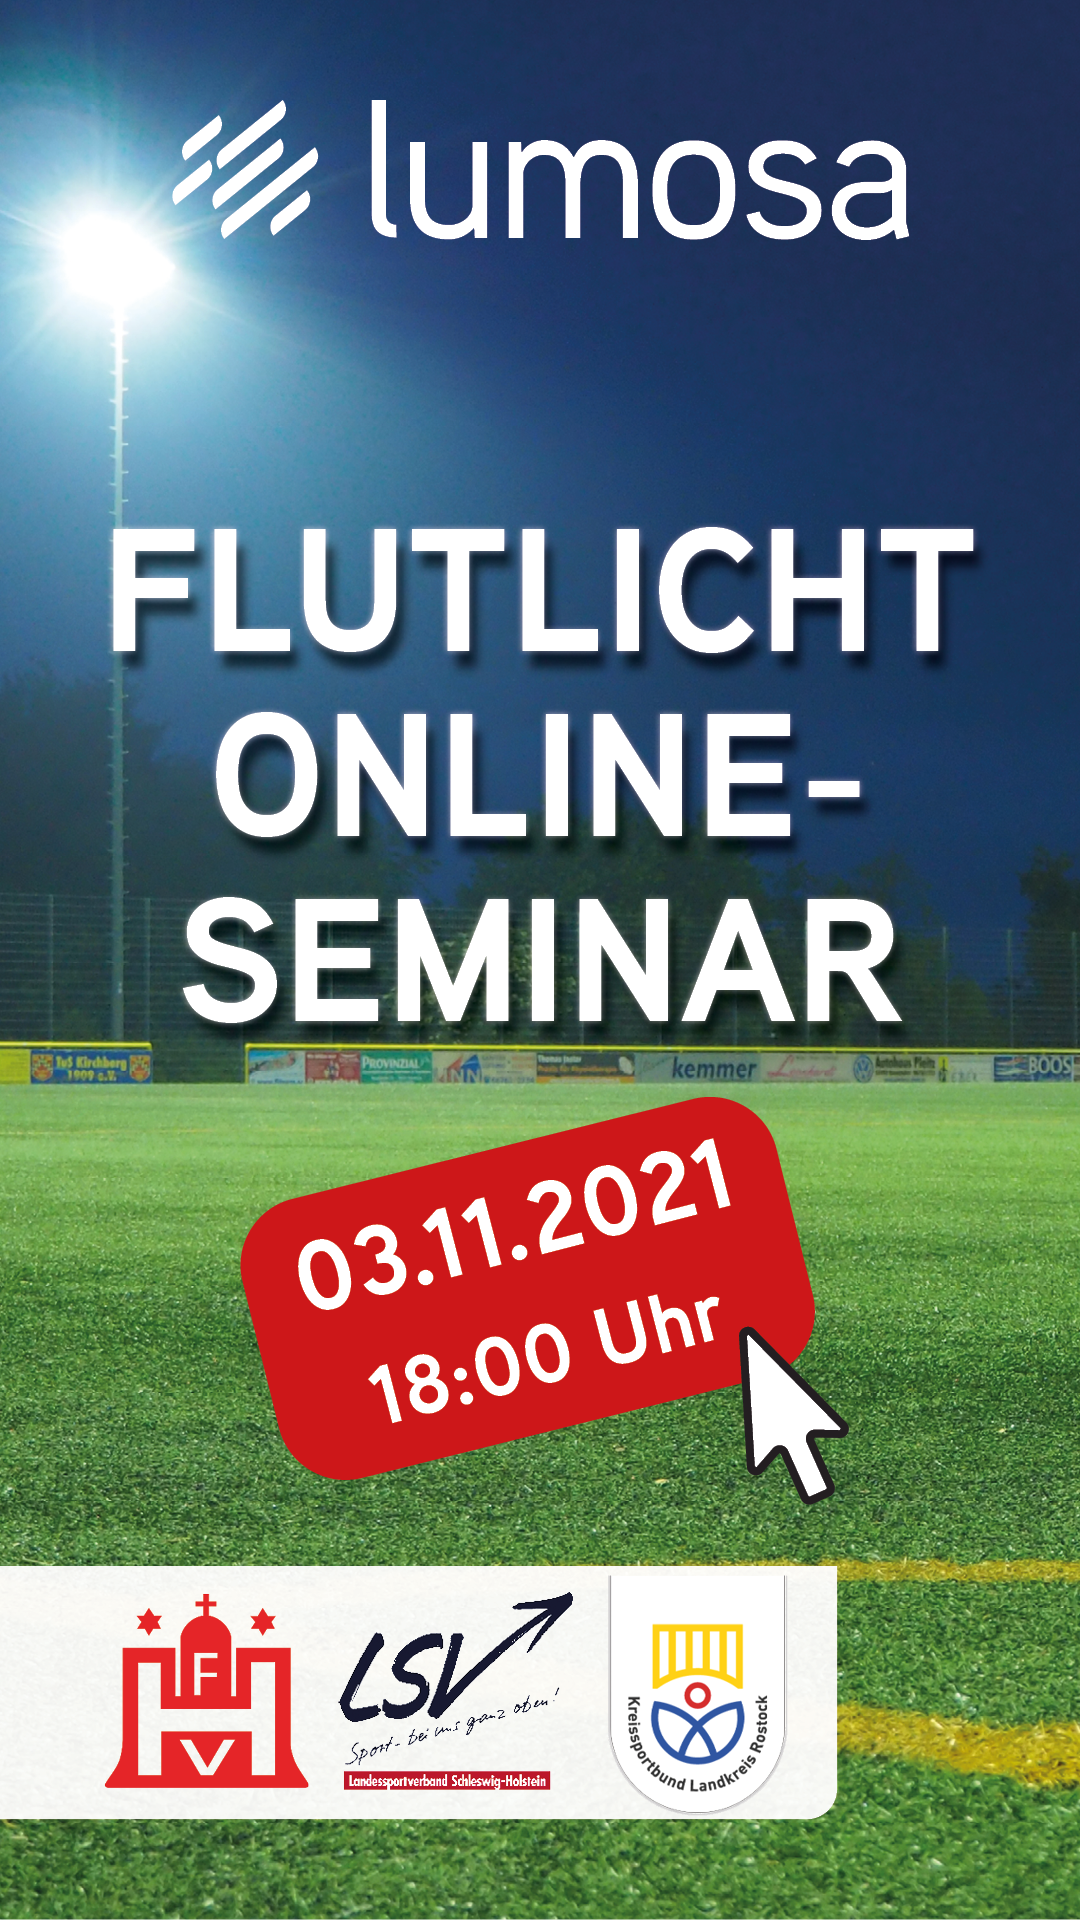 lumosa Online-Seminar Flutlicht 03.11.2021